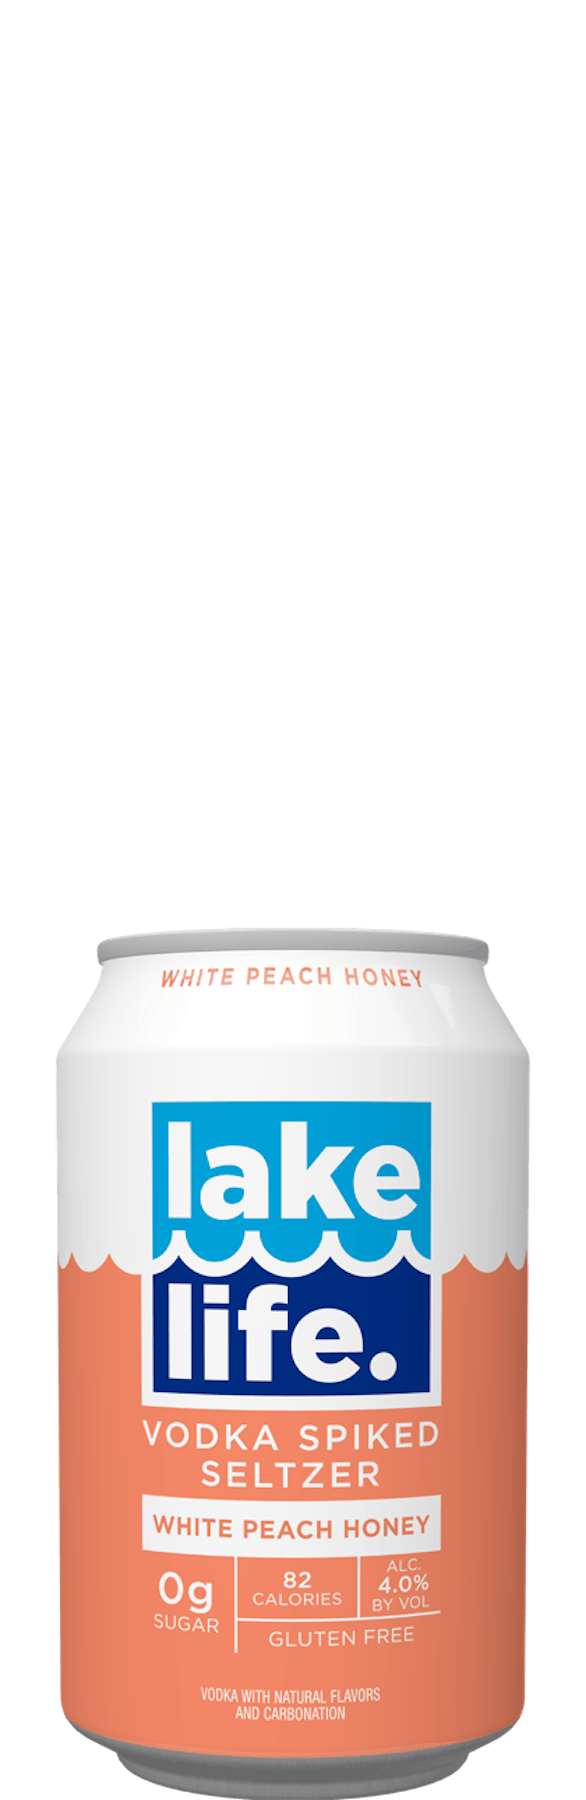 Lake Life White Peach Honey Seltzer